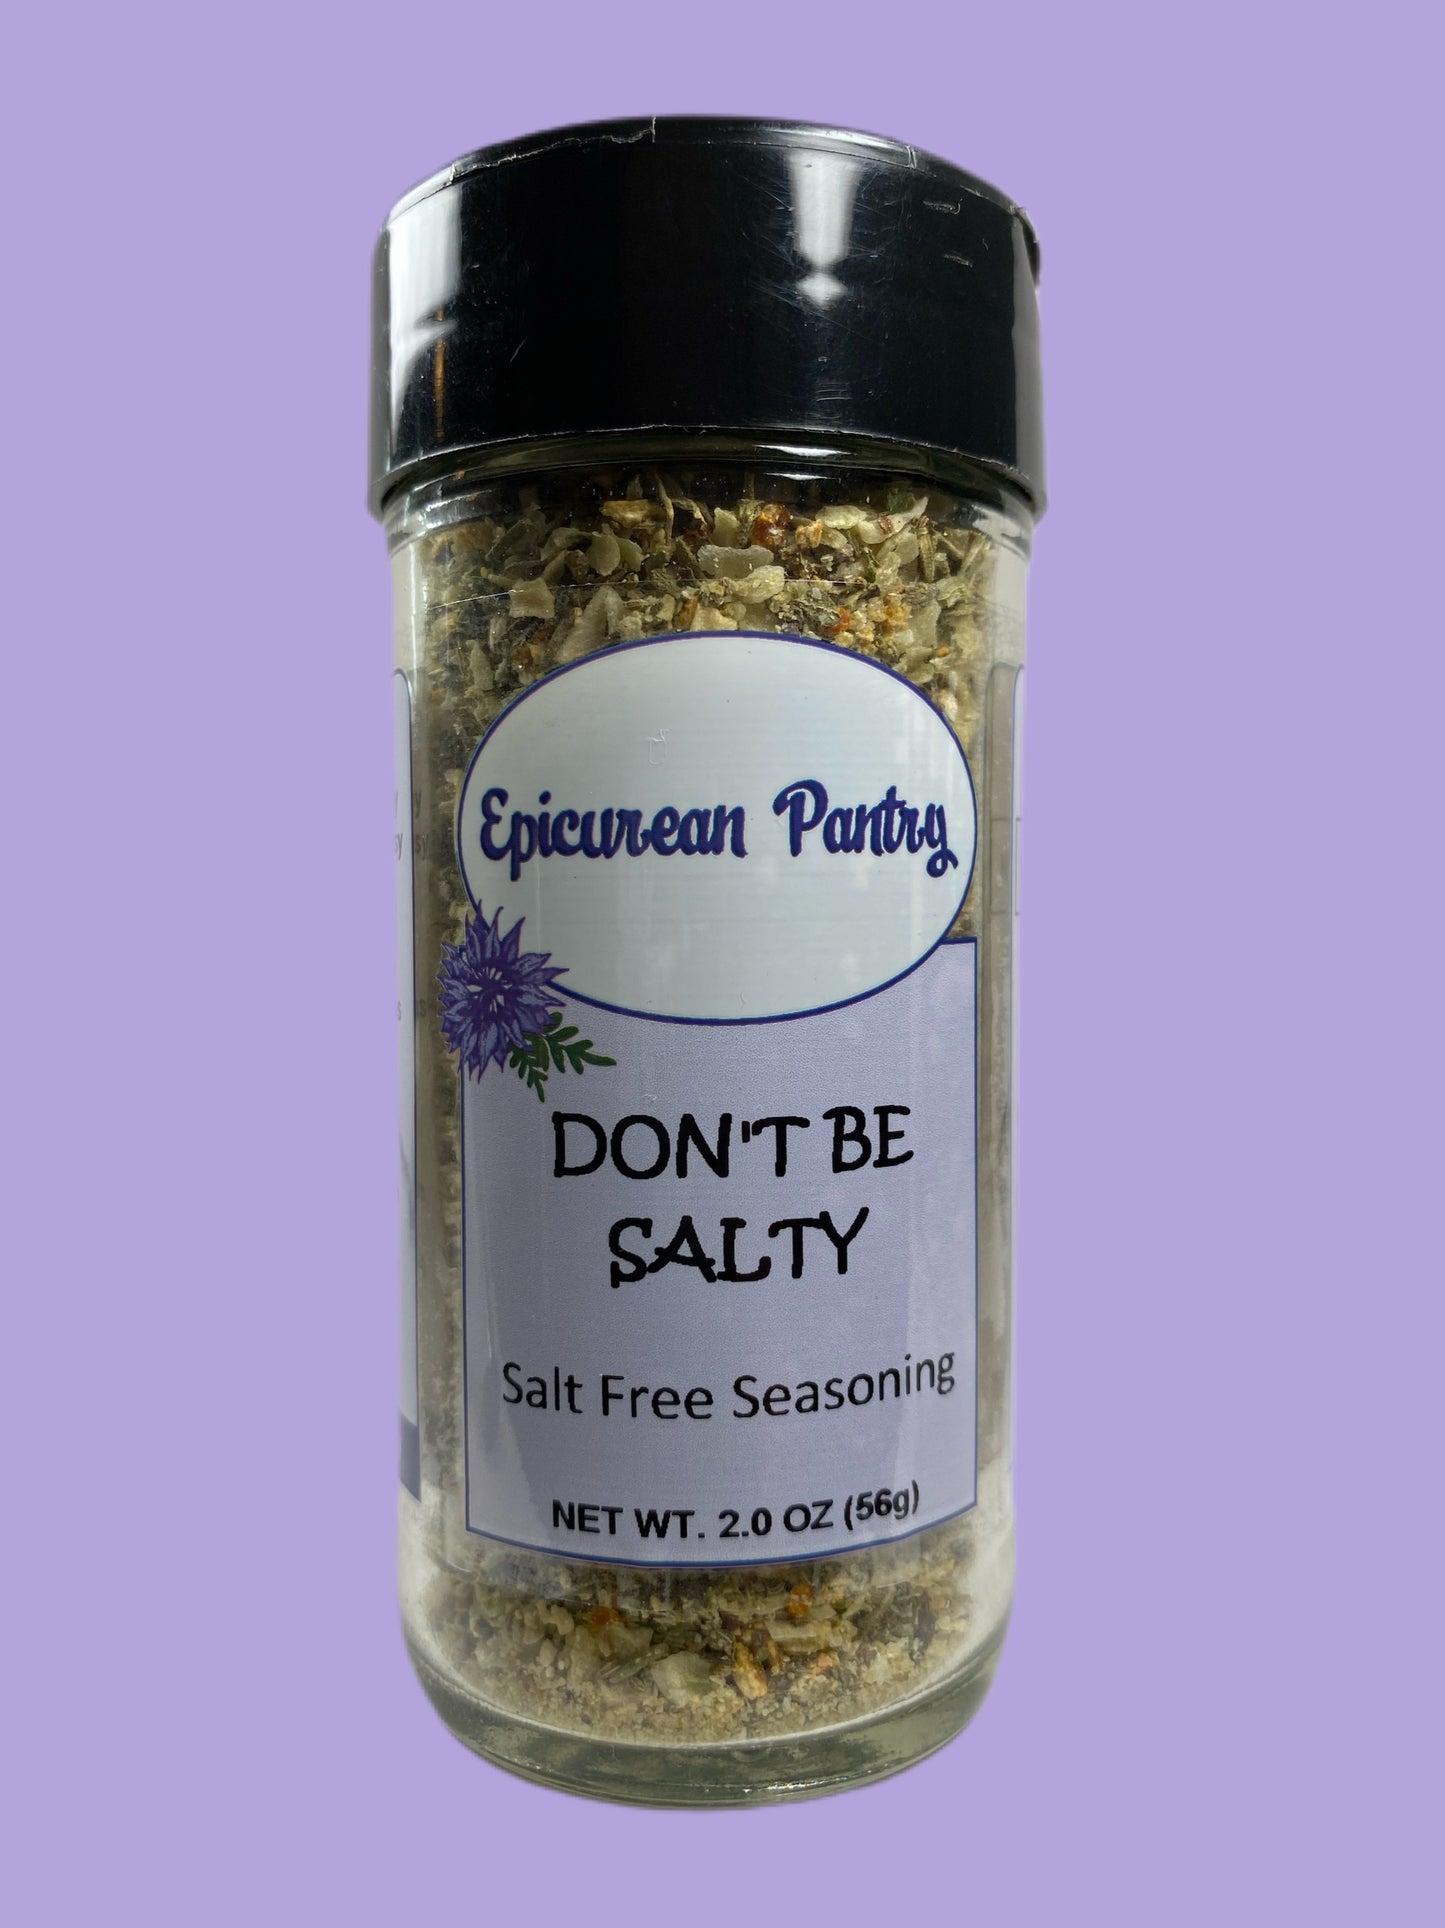 Don't Be Salty - Salt Free Seasoning - 2.0 oz net wt